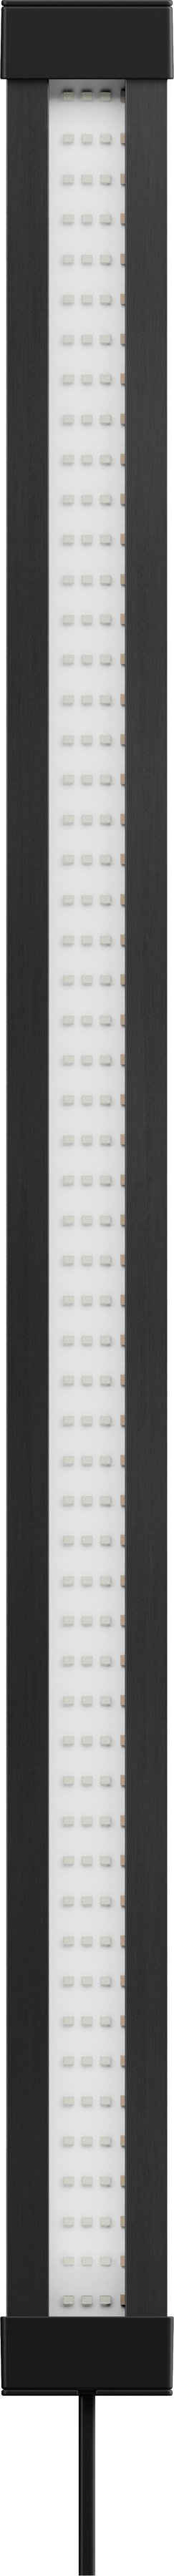 Tetra LED Aquariumleuchte Tetronic LED ProLine 780, LED fest integriert